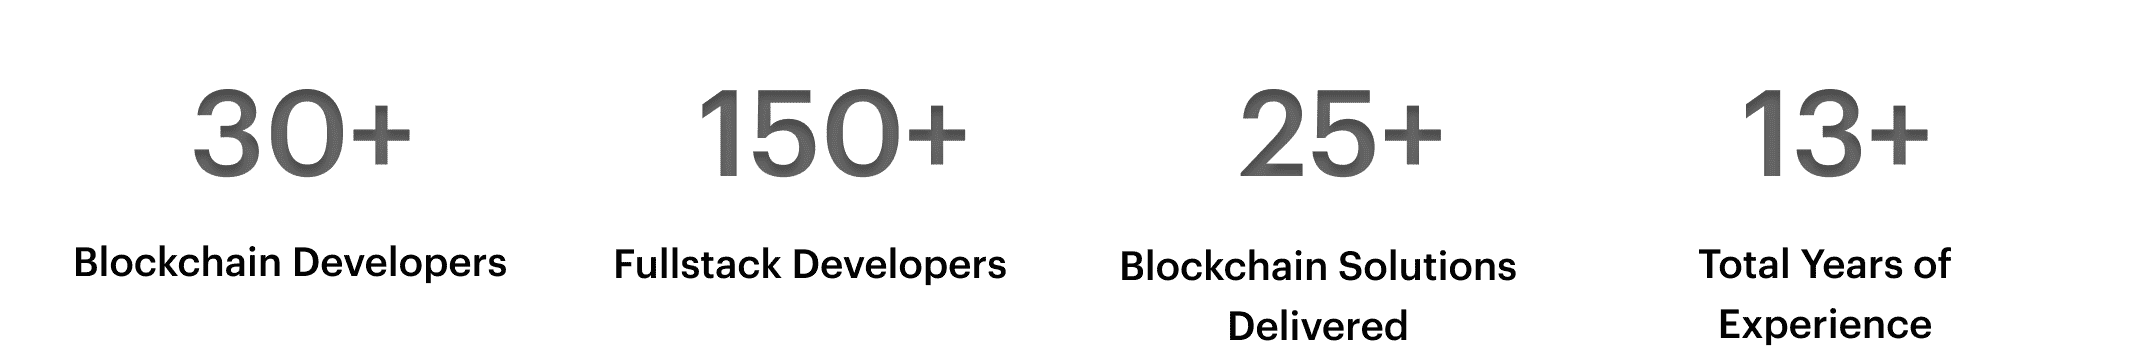 Web 3.0 development-numbers